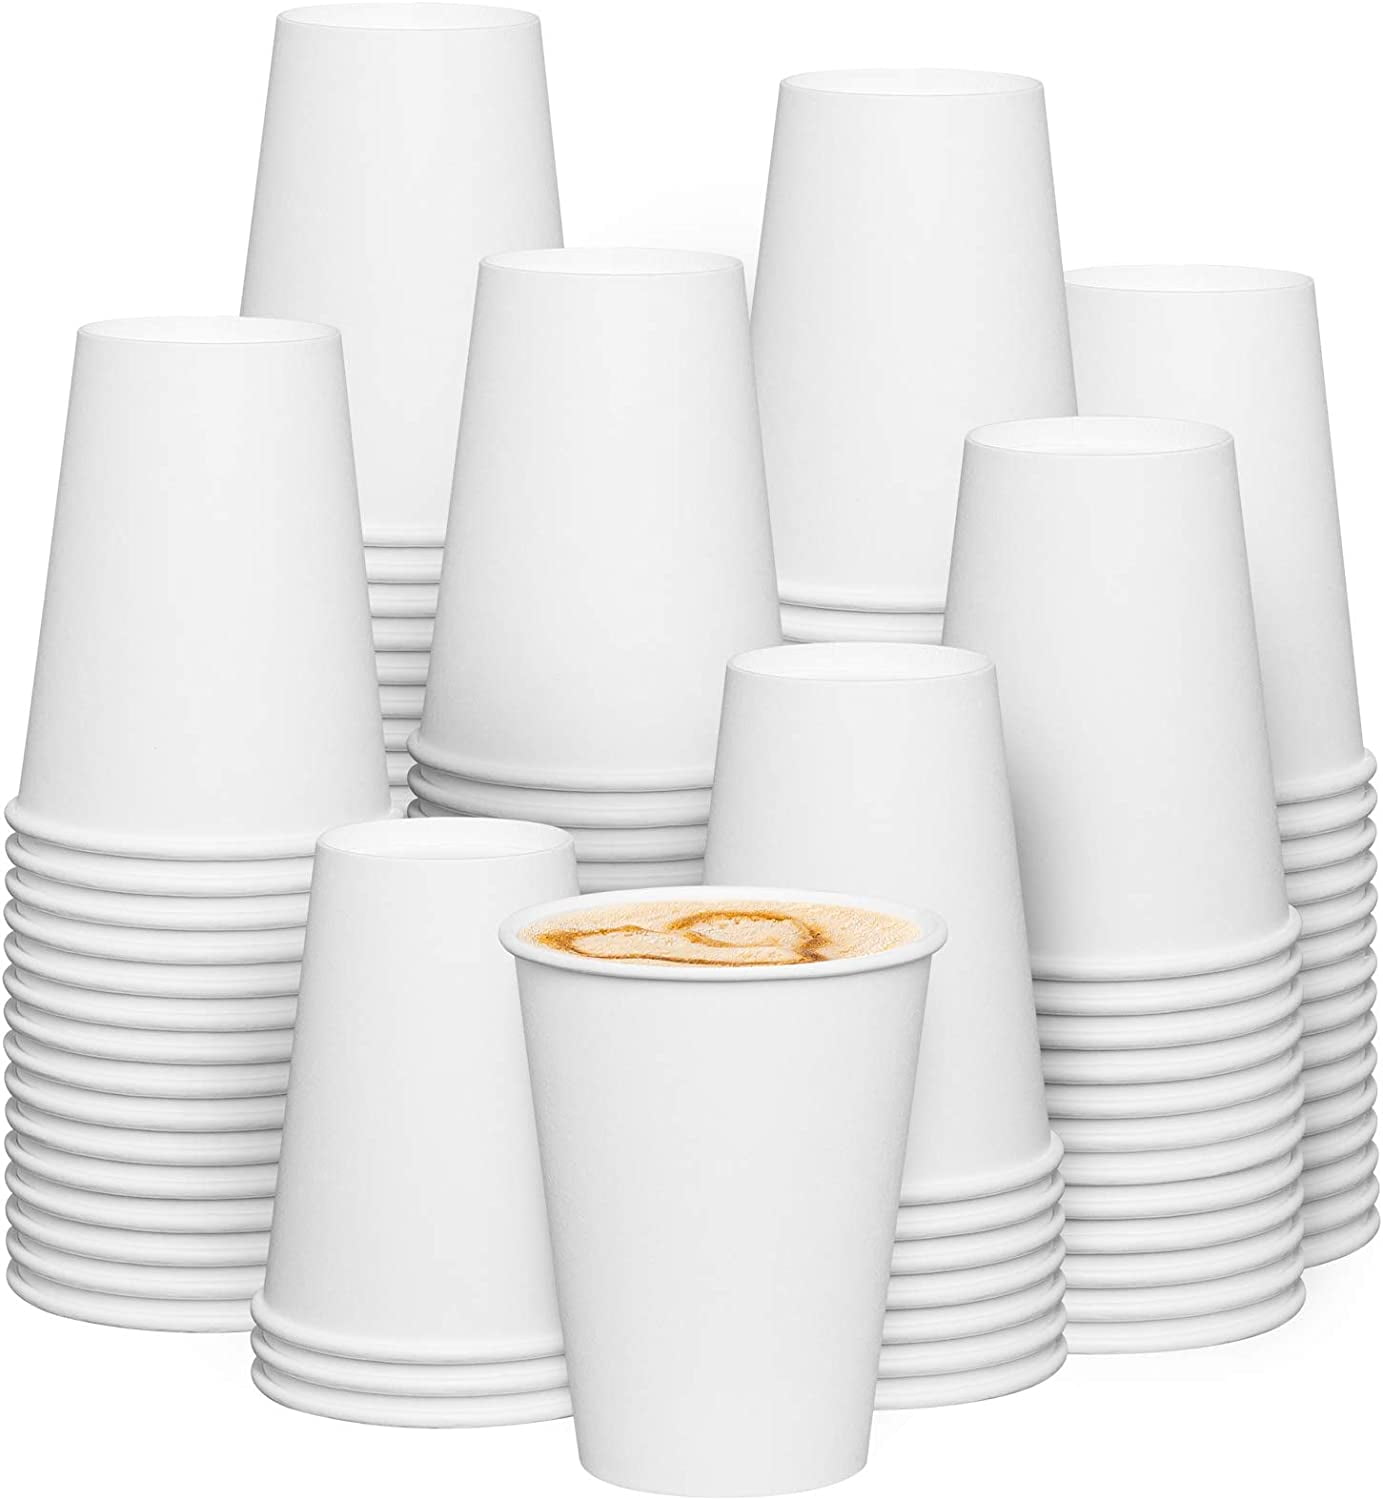  Decony 4 Oz. Cups White Paper Hot Cups Espresso